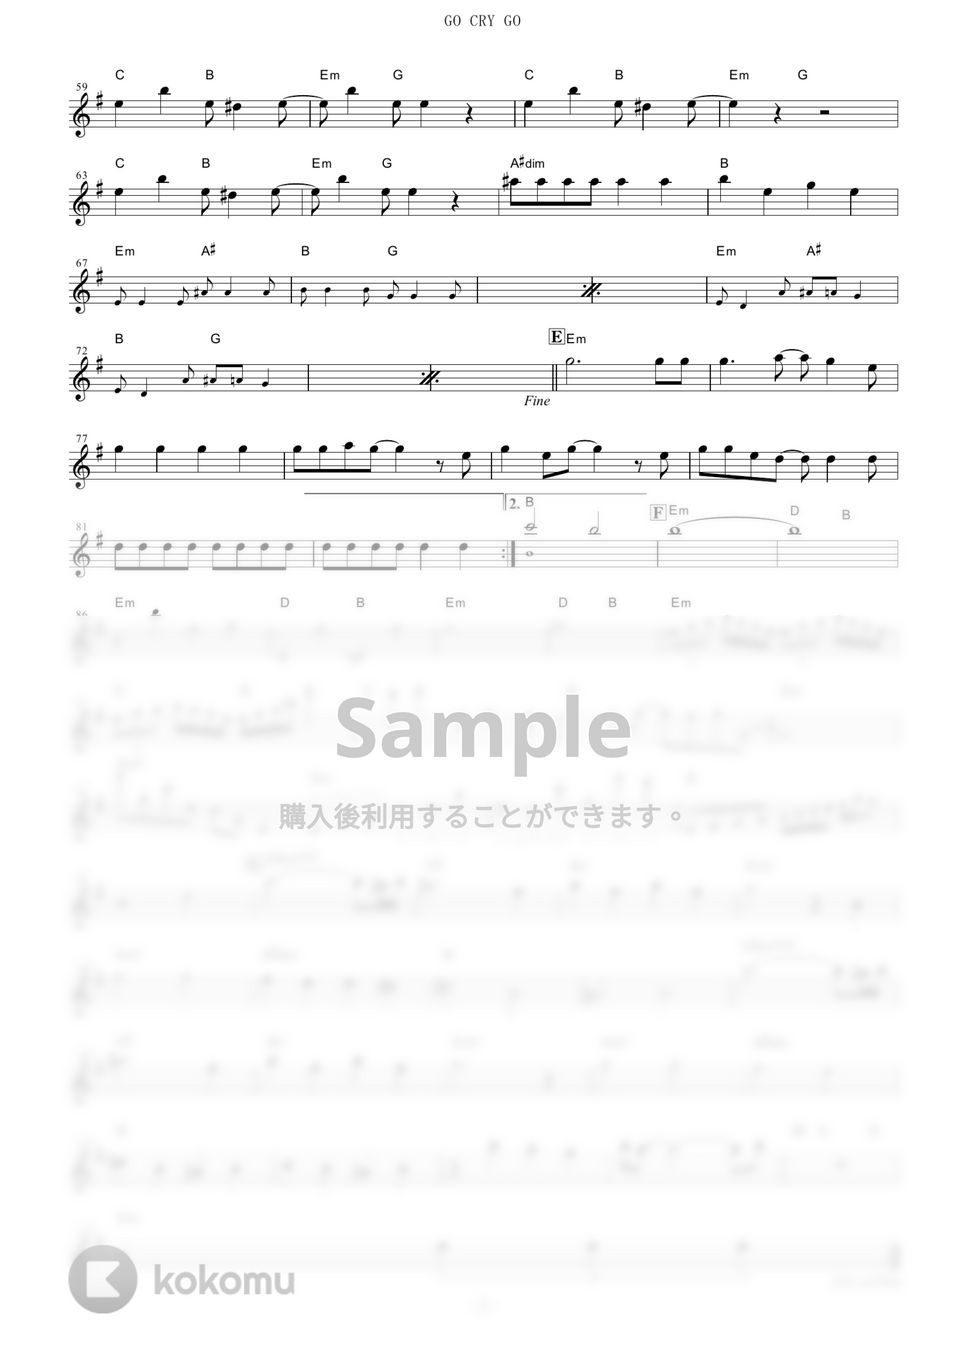 OxT - GO CRY GO (『オーバーロードII』 / in Bb) by muta-sax